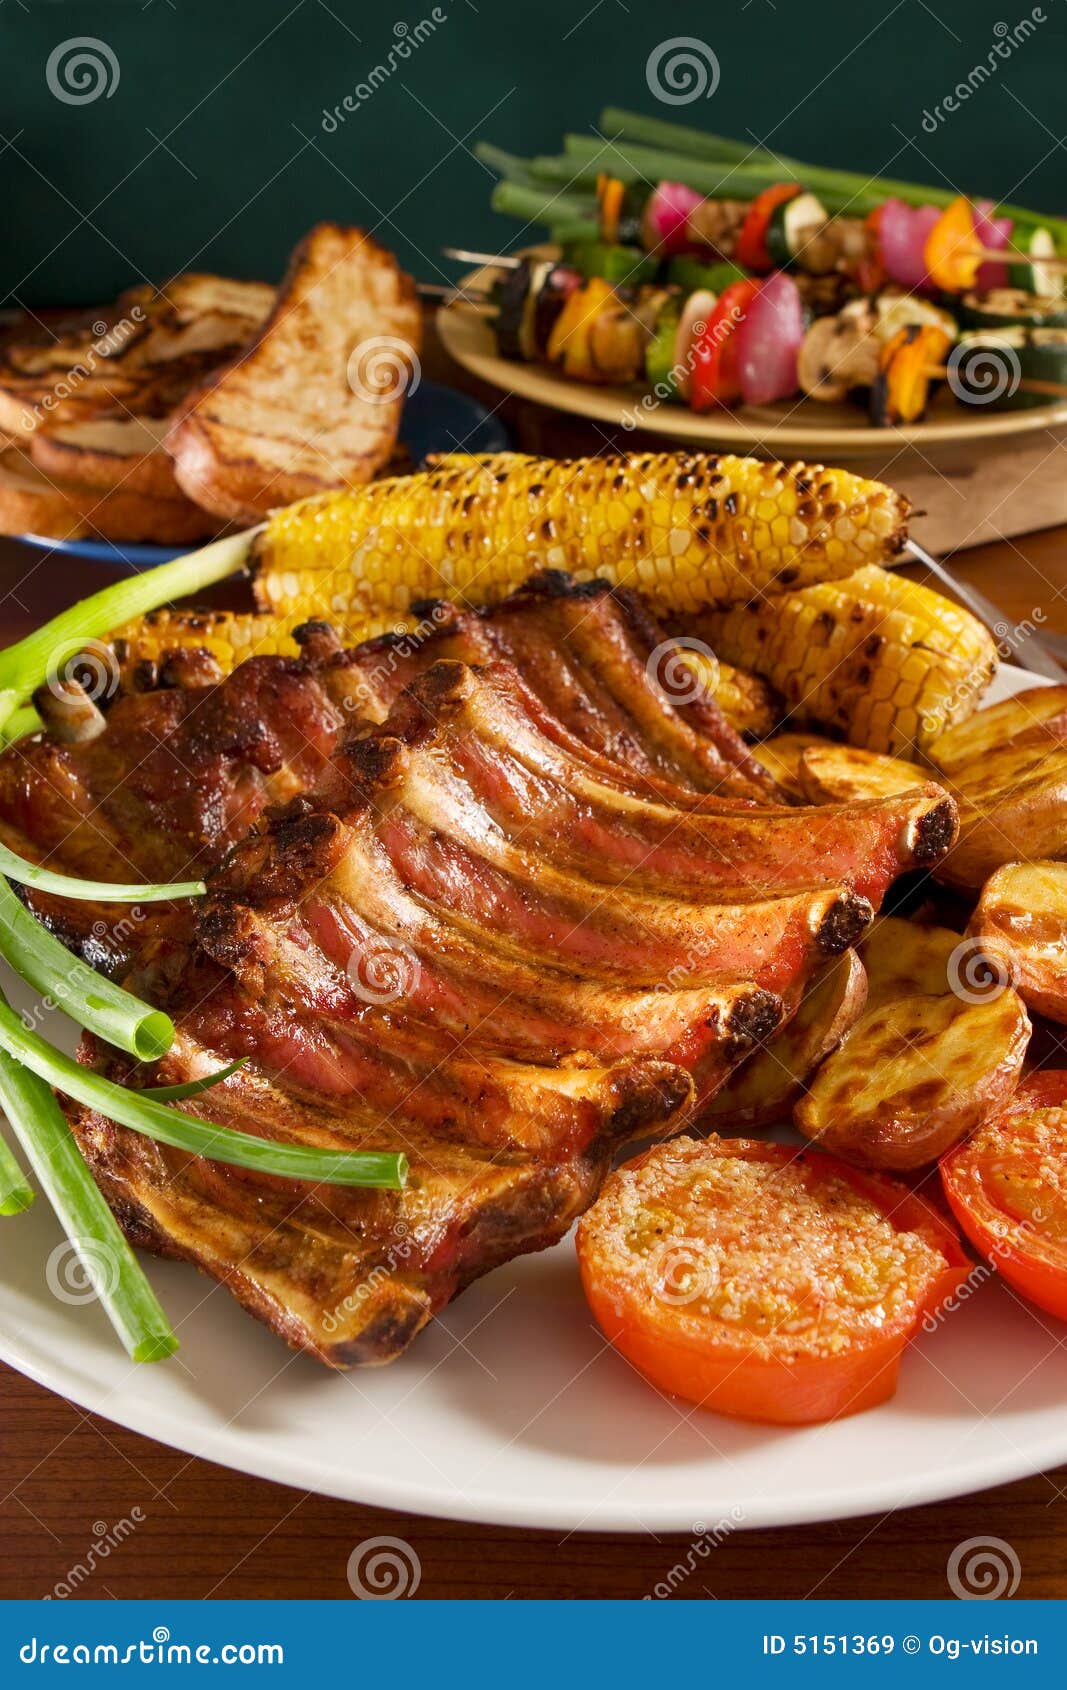 Grilled pork ribs stock image. Image of abundance, platter - 5151369